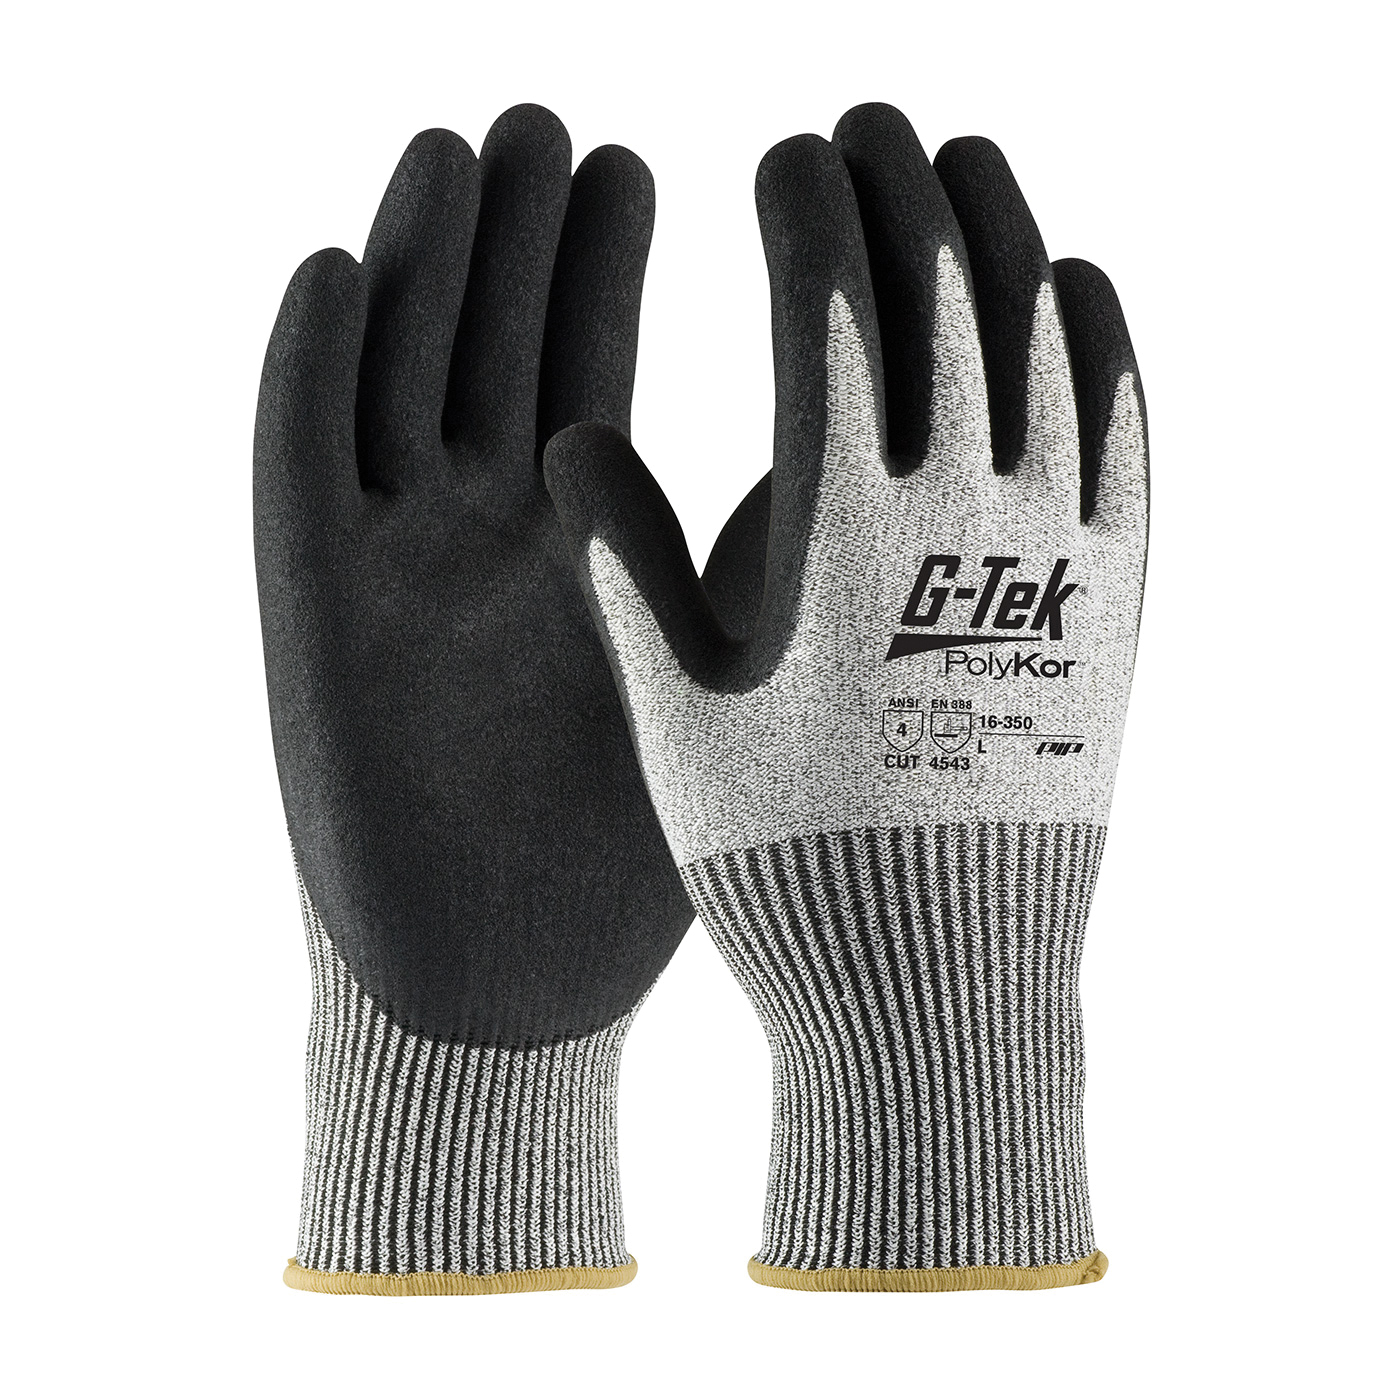 G-Tek® 09-K300LP/M Cut Resistant Gloves, M, Bright Coating, Cowhide Leather/Kevlar®, Knit Wrist Cuff, Resists: Abrasion, Cut and Puncture